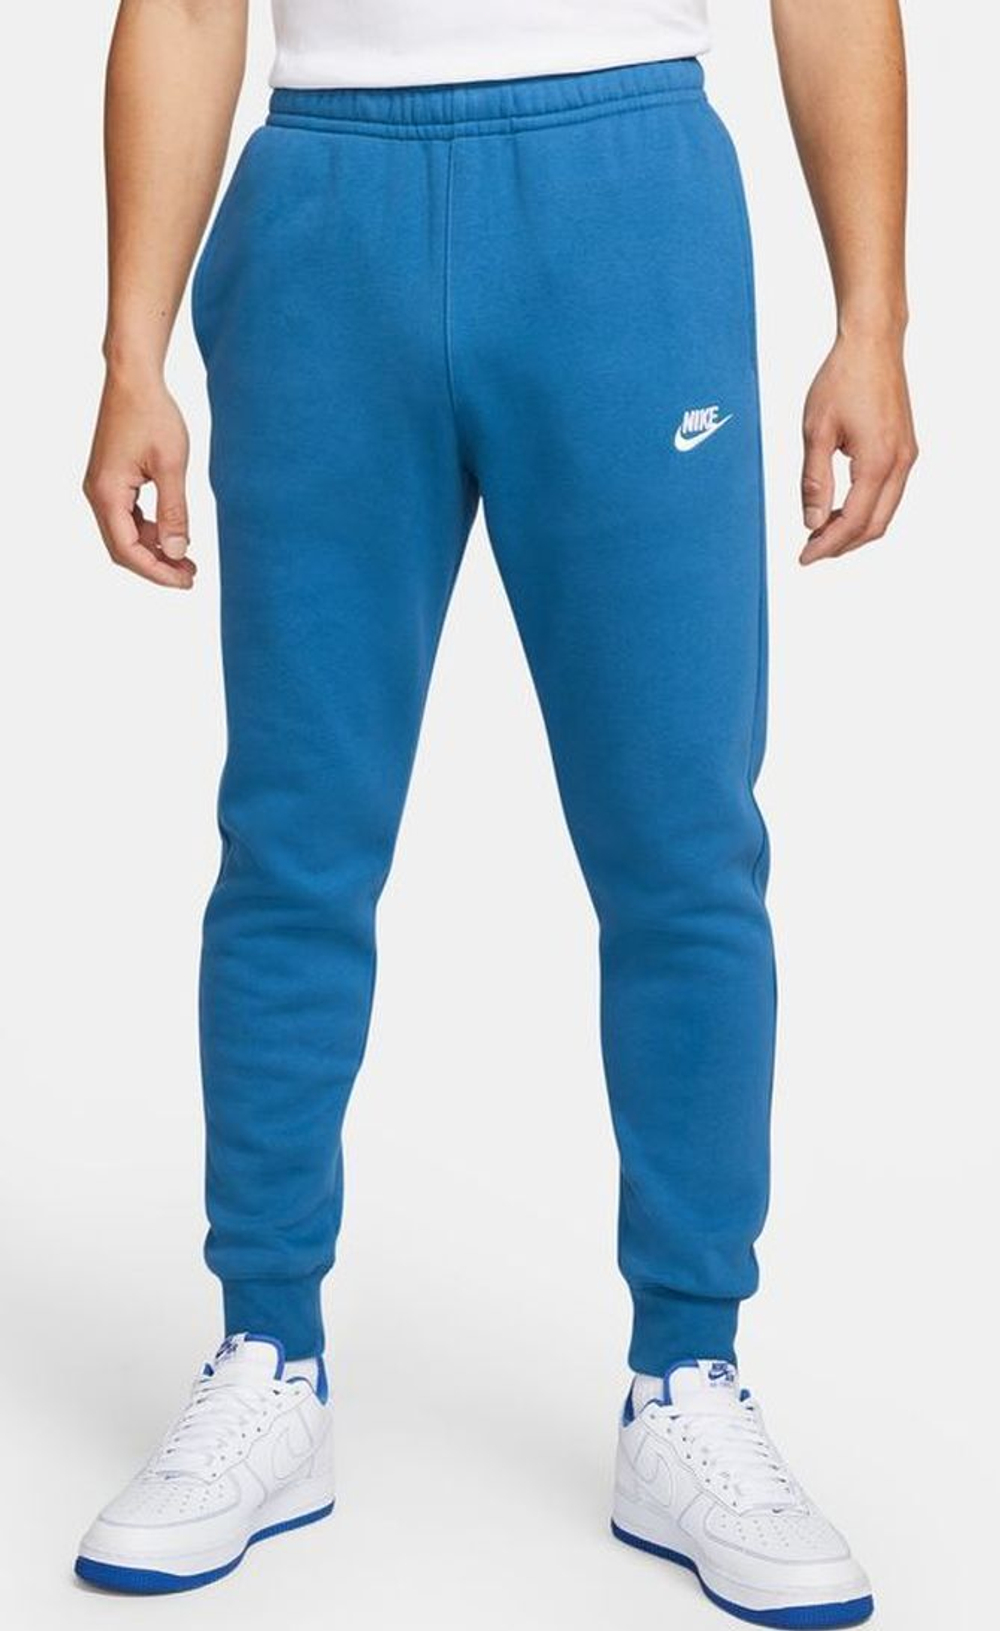 Мужские теннисные штаны Nike Sportswear Club Fleece M - dark marineblue/dark marine blue/white - купить по выгодной цене